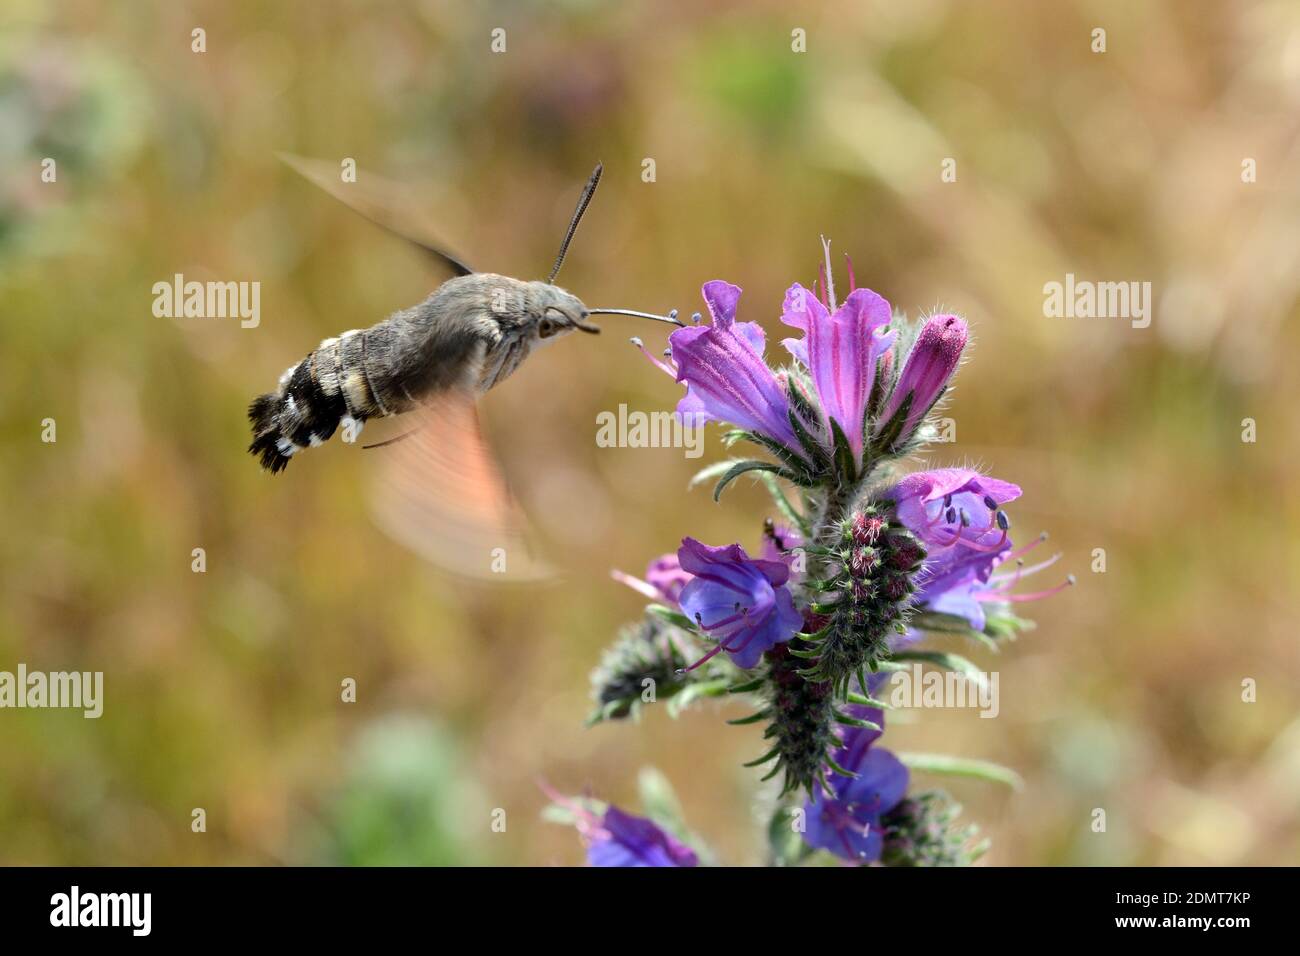 Hummingbird Hawk-Moth, Macroglossum stellatarum, Feeding with Proboscis on Nectar of Tube-Shaped Flowers while Hovering Stock Photo